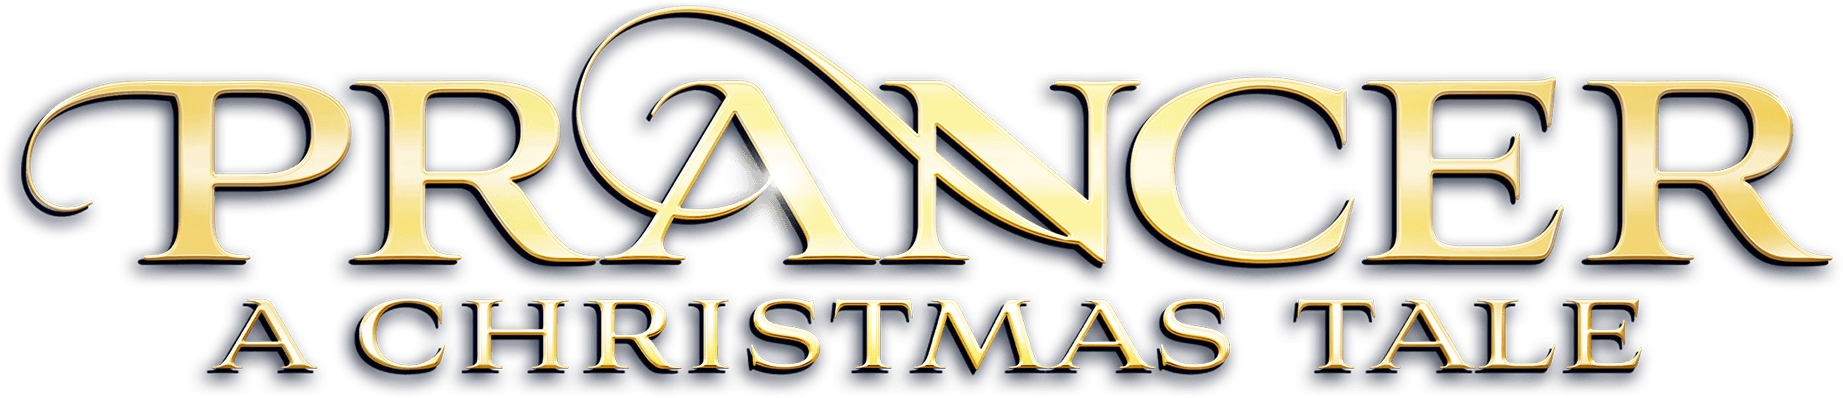 Prancer: A Christmas Tale logo